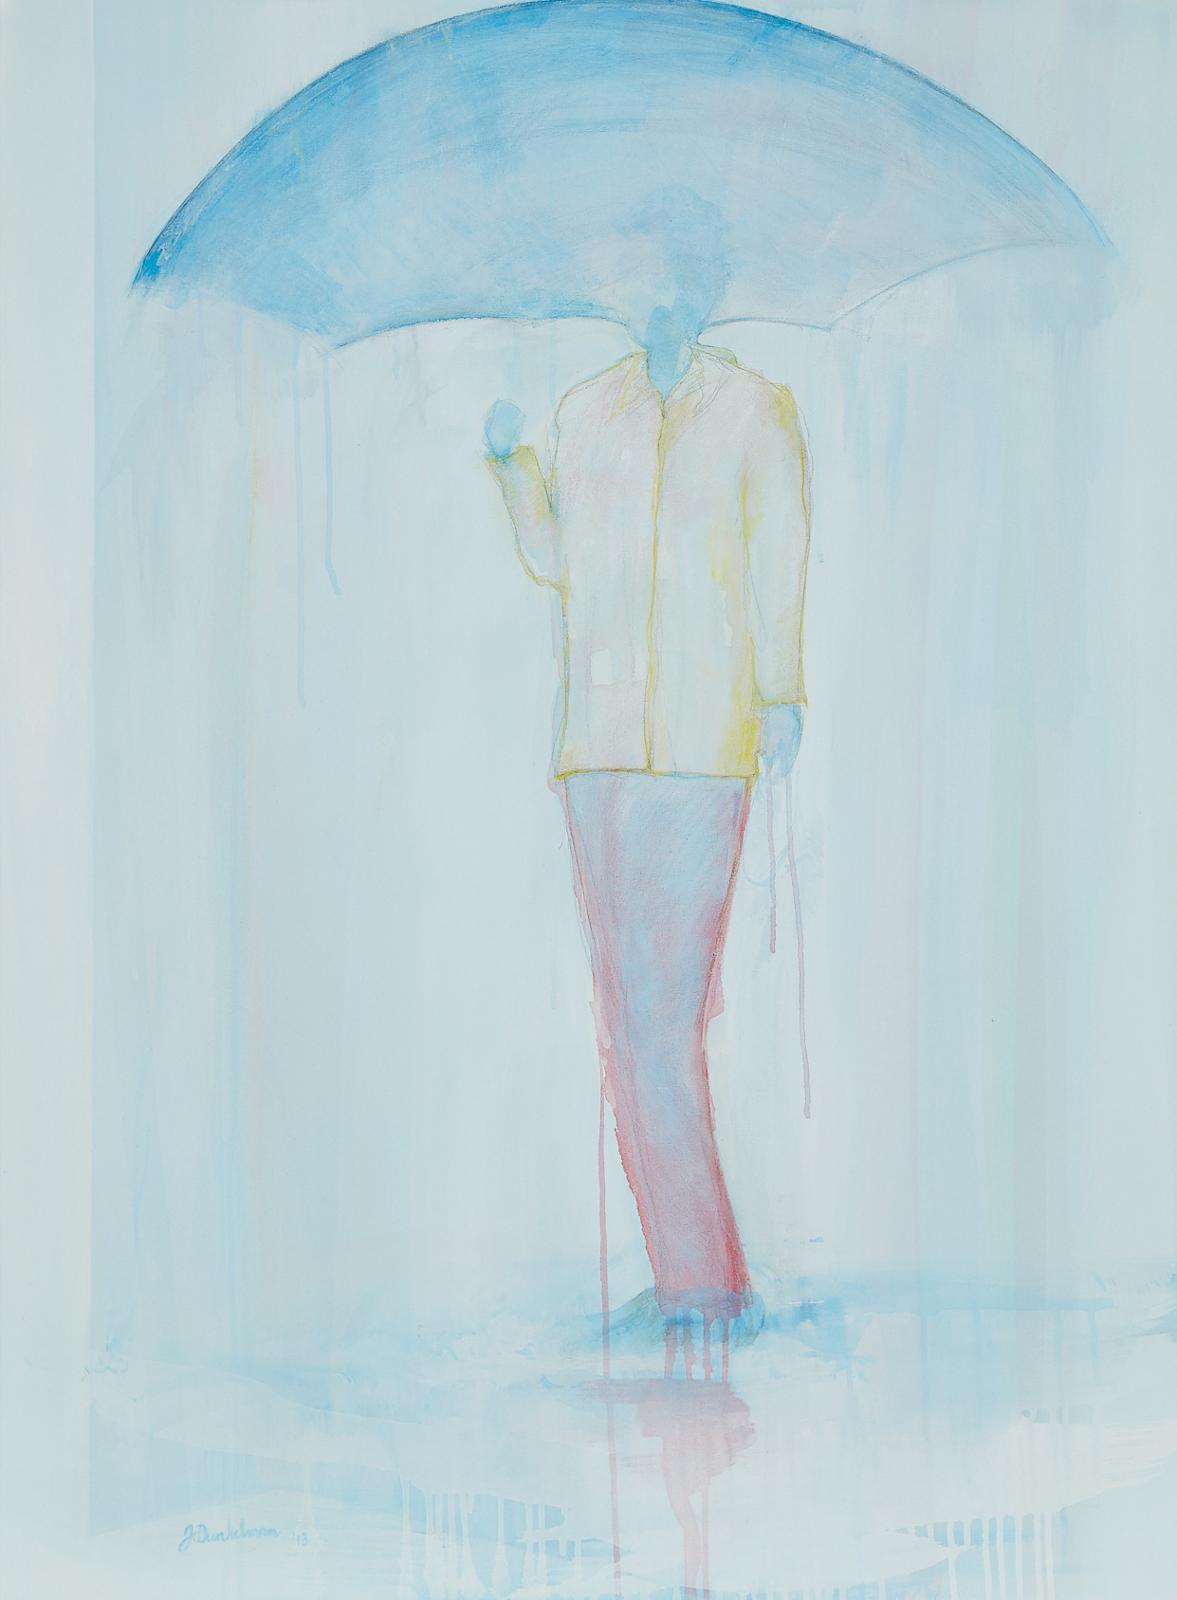 Jonathan Dunkelman - Man With Umbrella, 2013